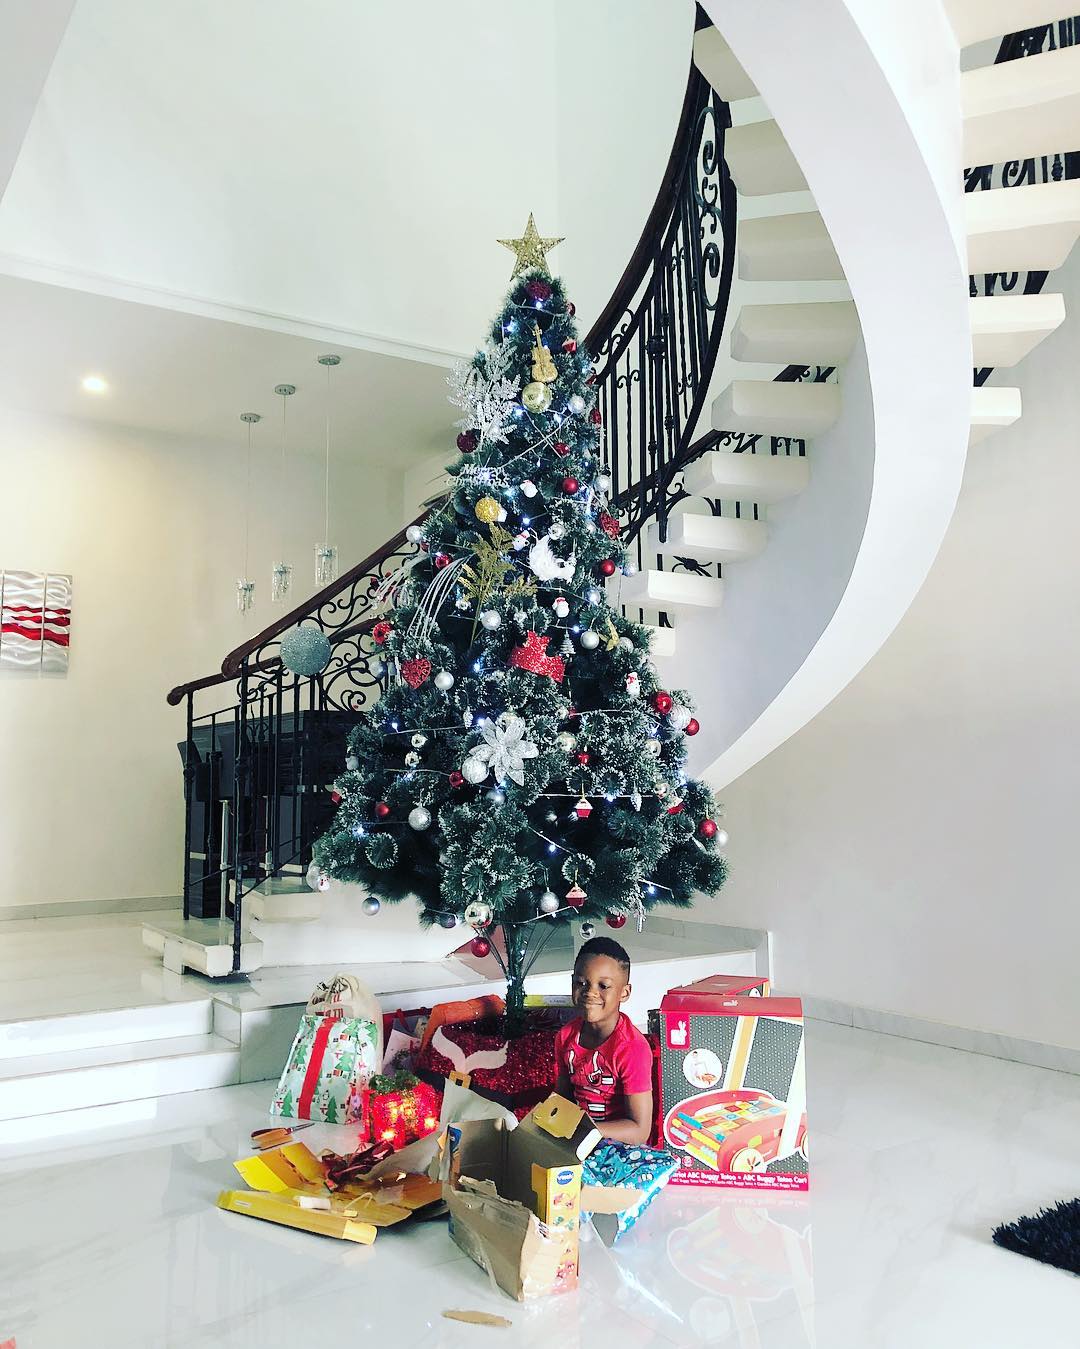 Paul Okoye Shares Family Christmas Picture